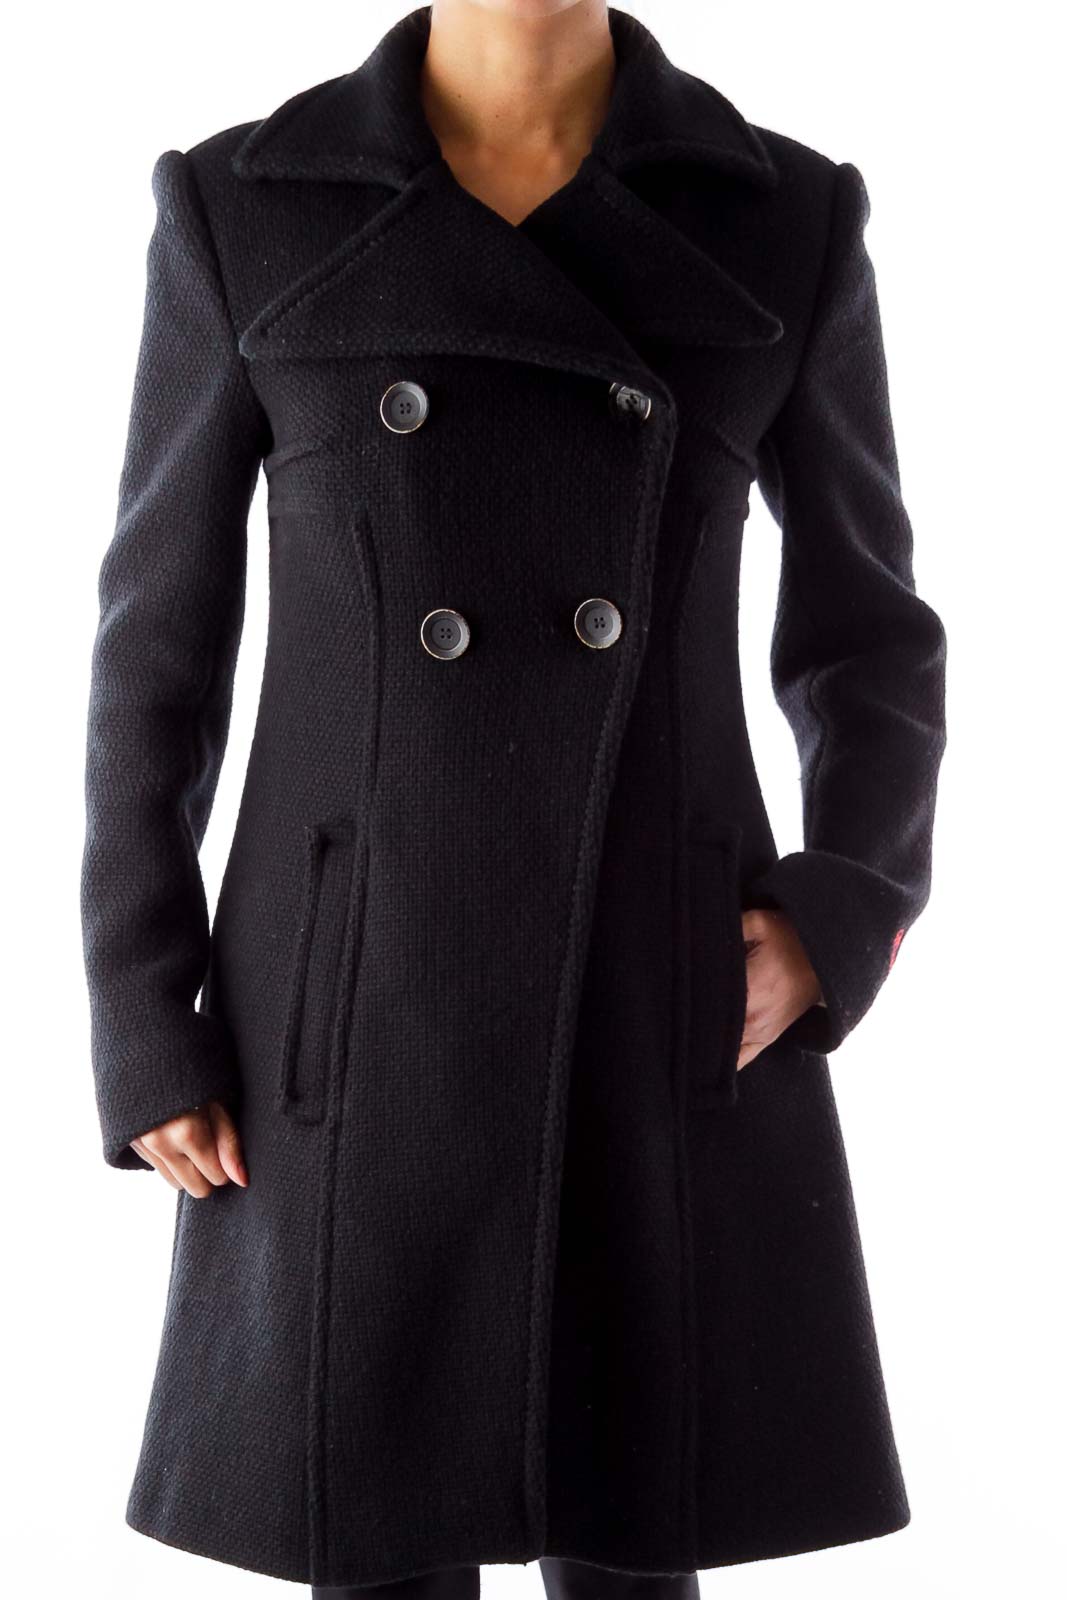 Black Tweed Jacket Front